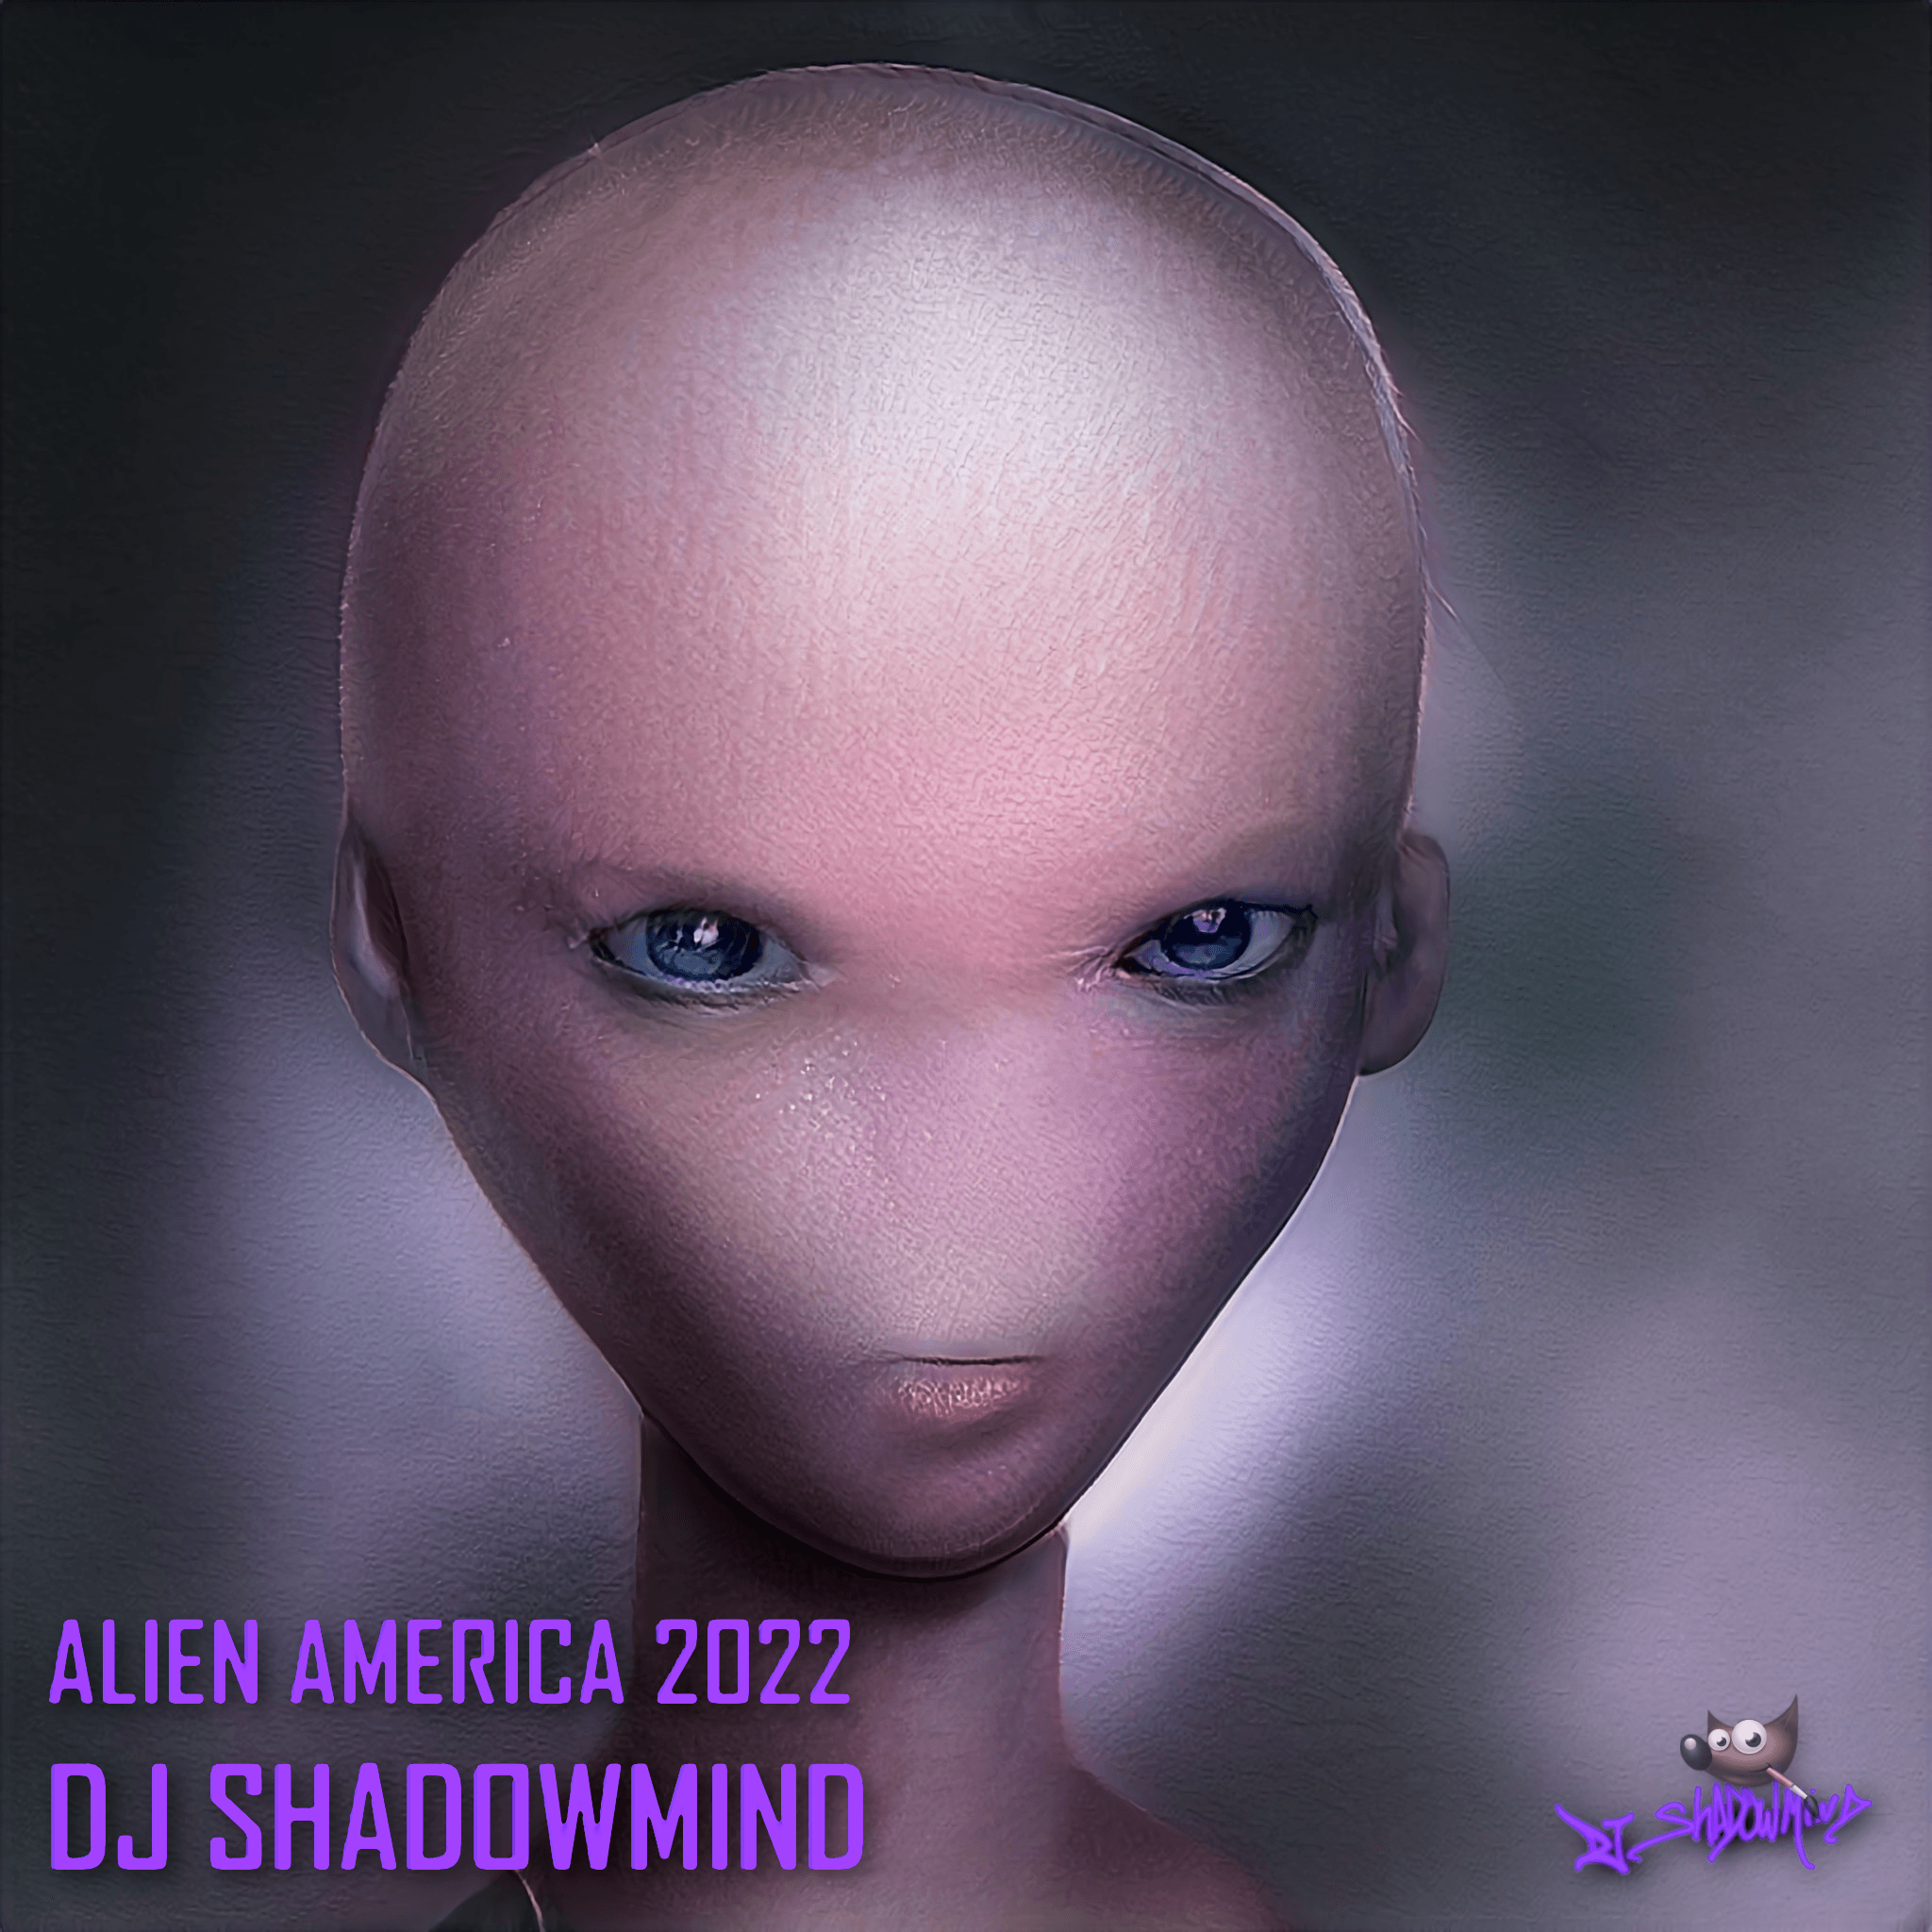 Alien America 2022 - Agent 171